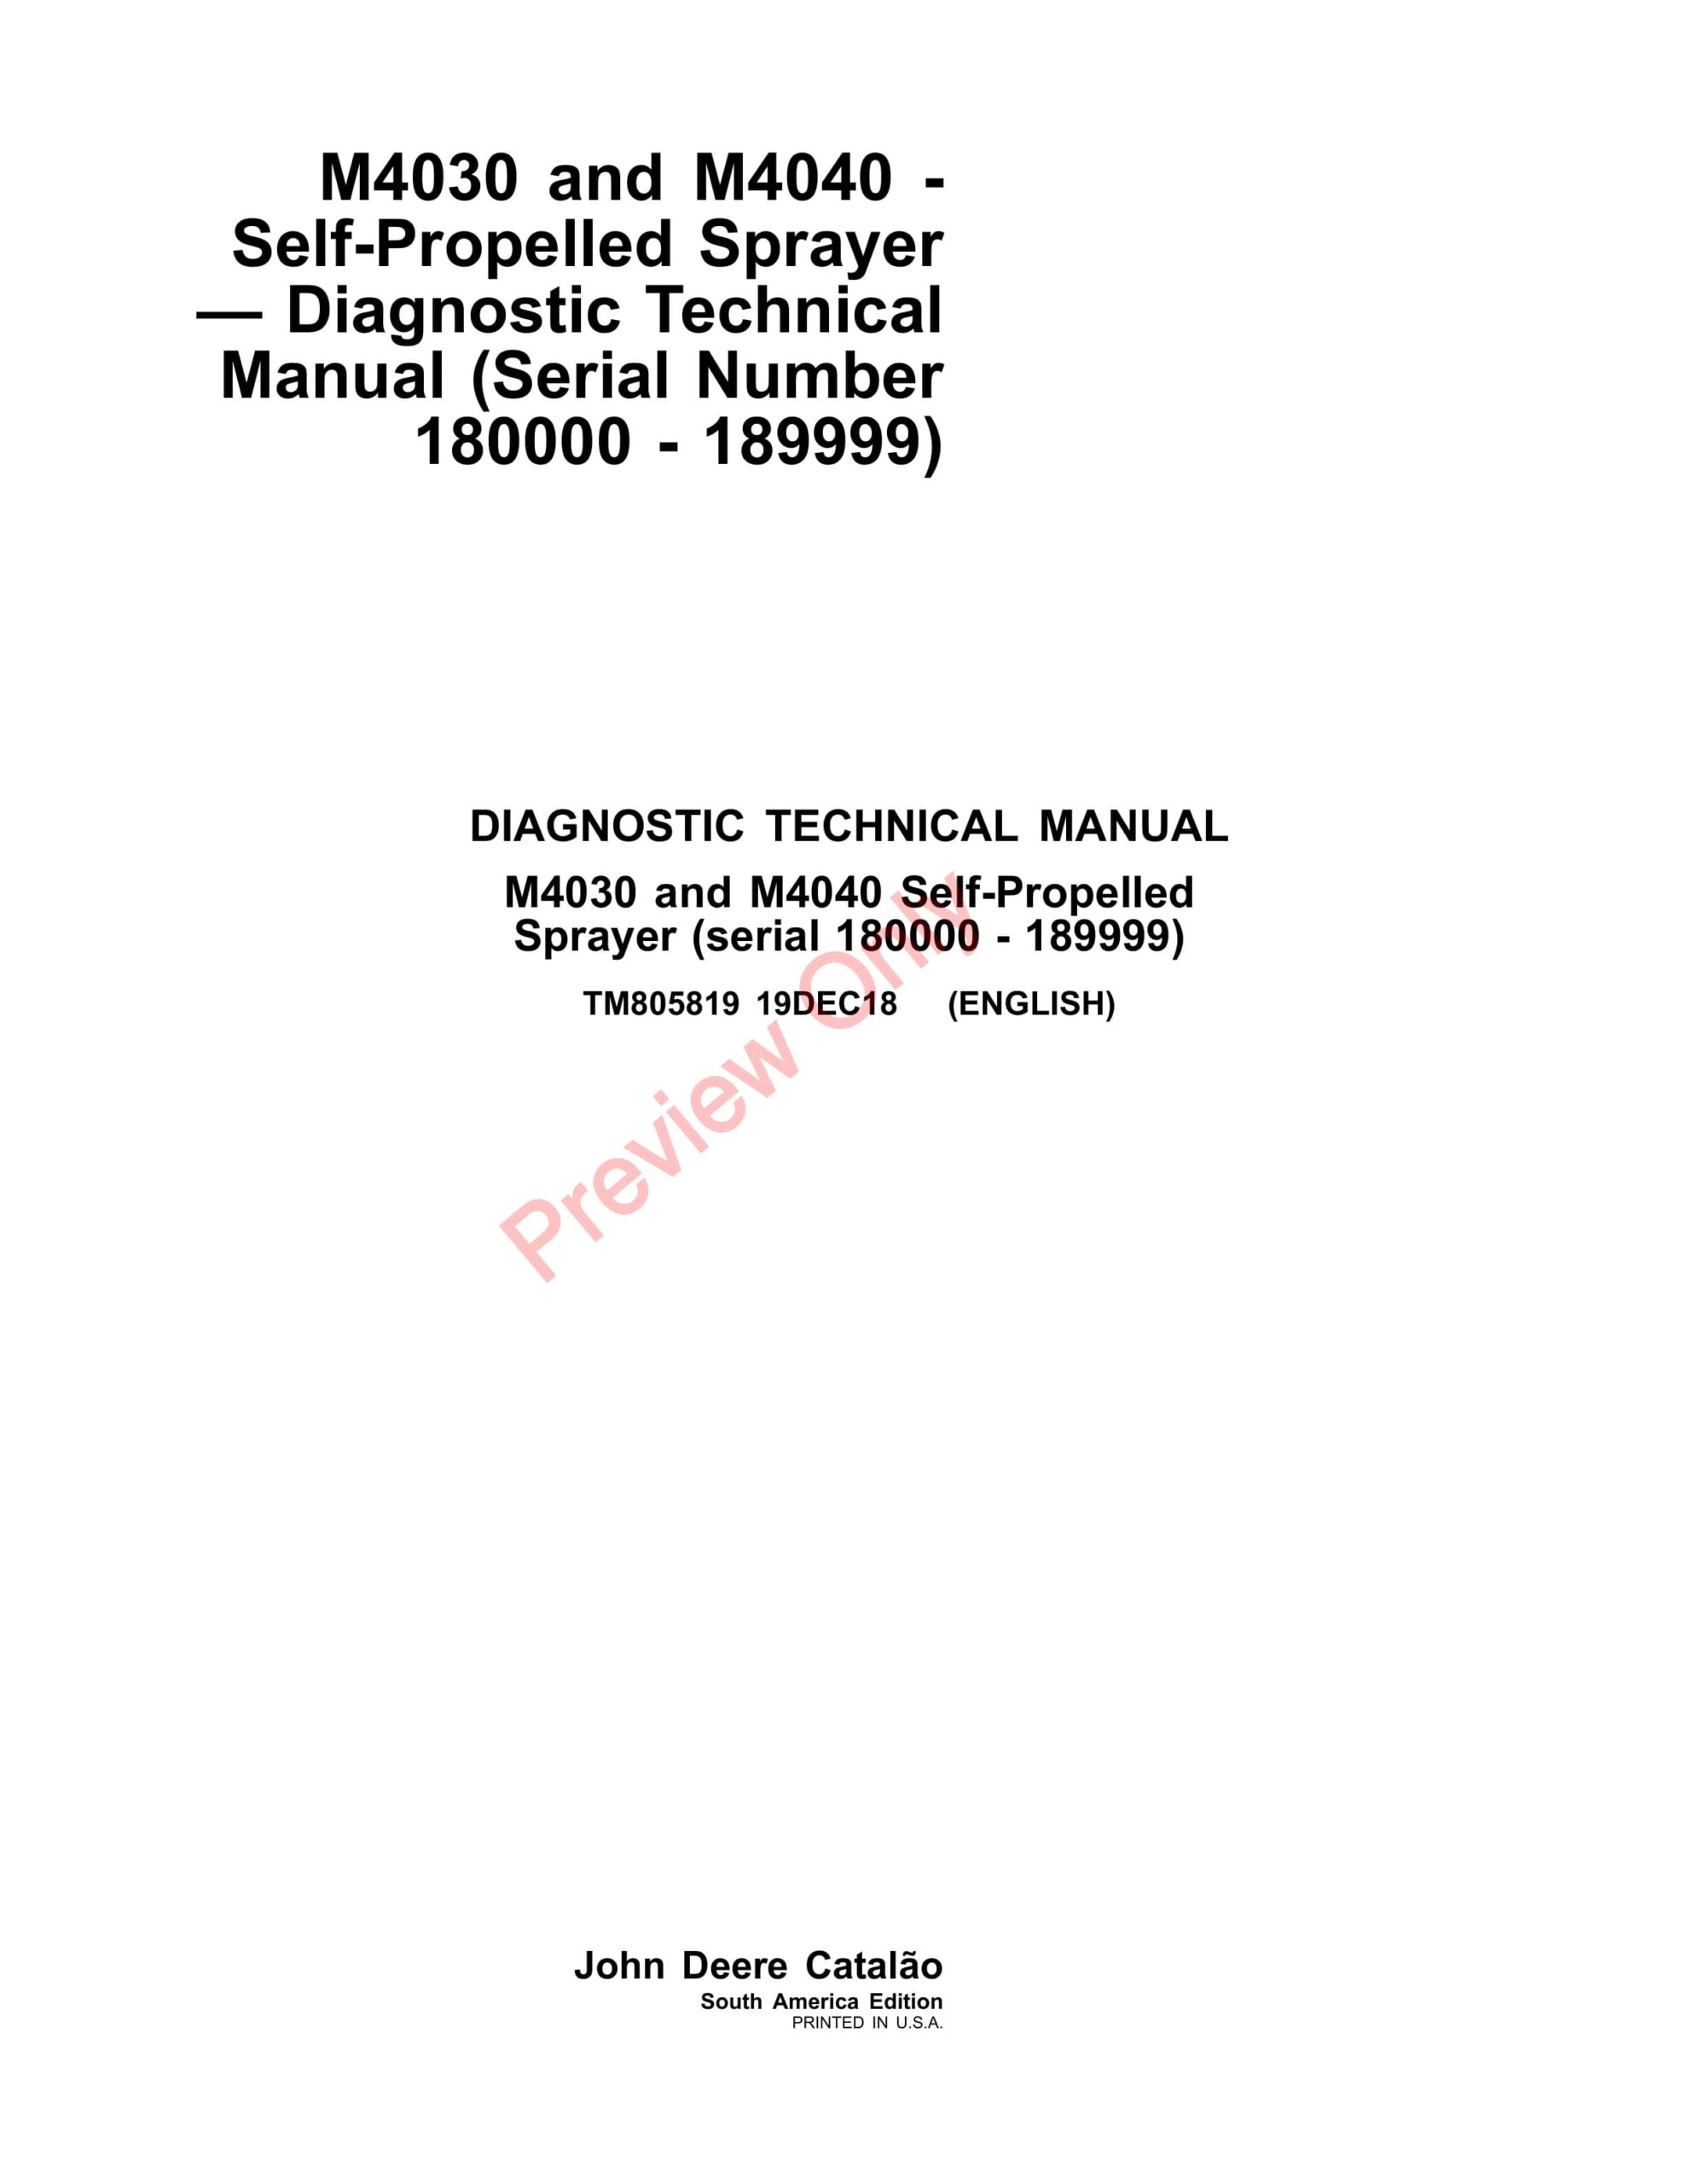 John Deere M4030 and M4040 Self-Propelled Sprayes Diagnostic Technical Manual TM805819 19DEC18-1